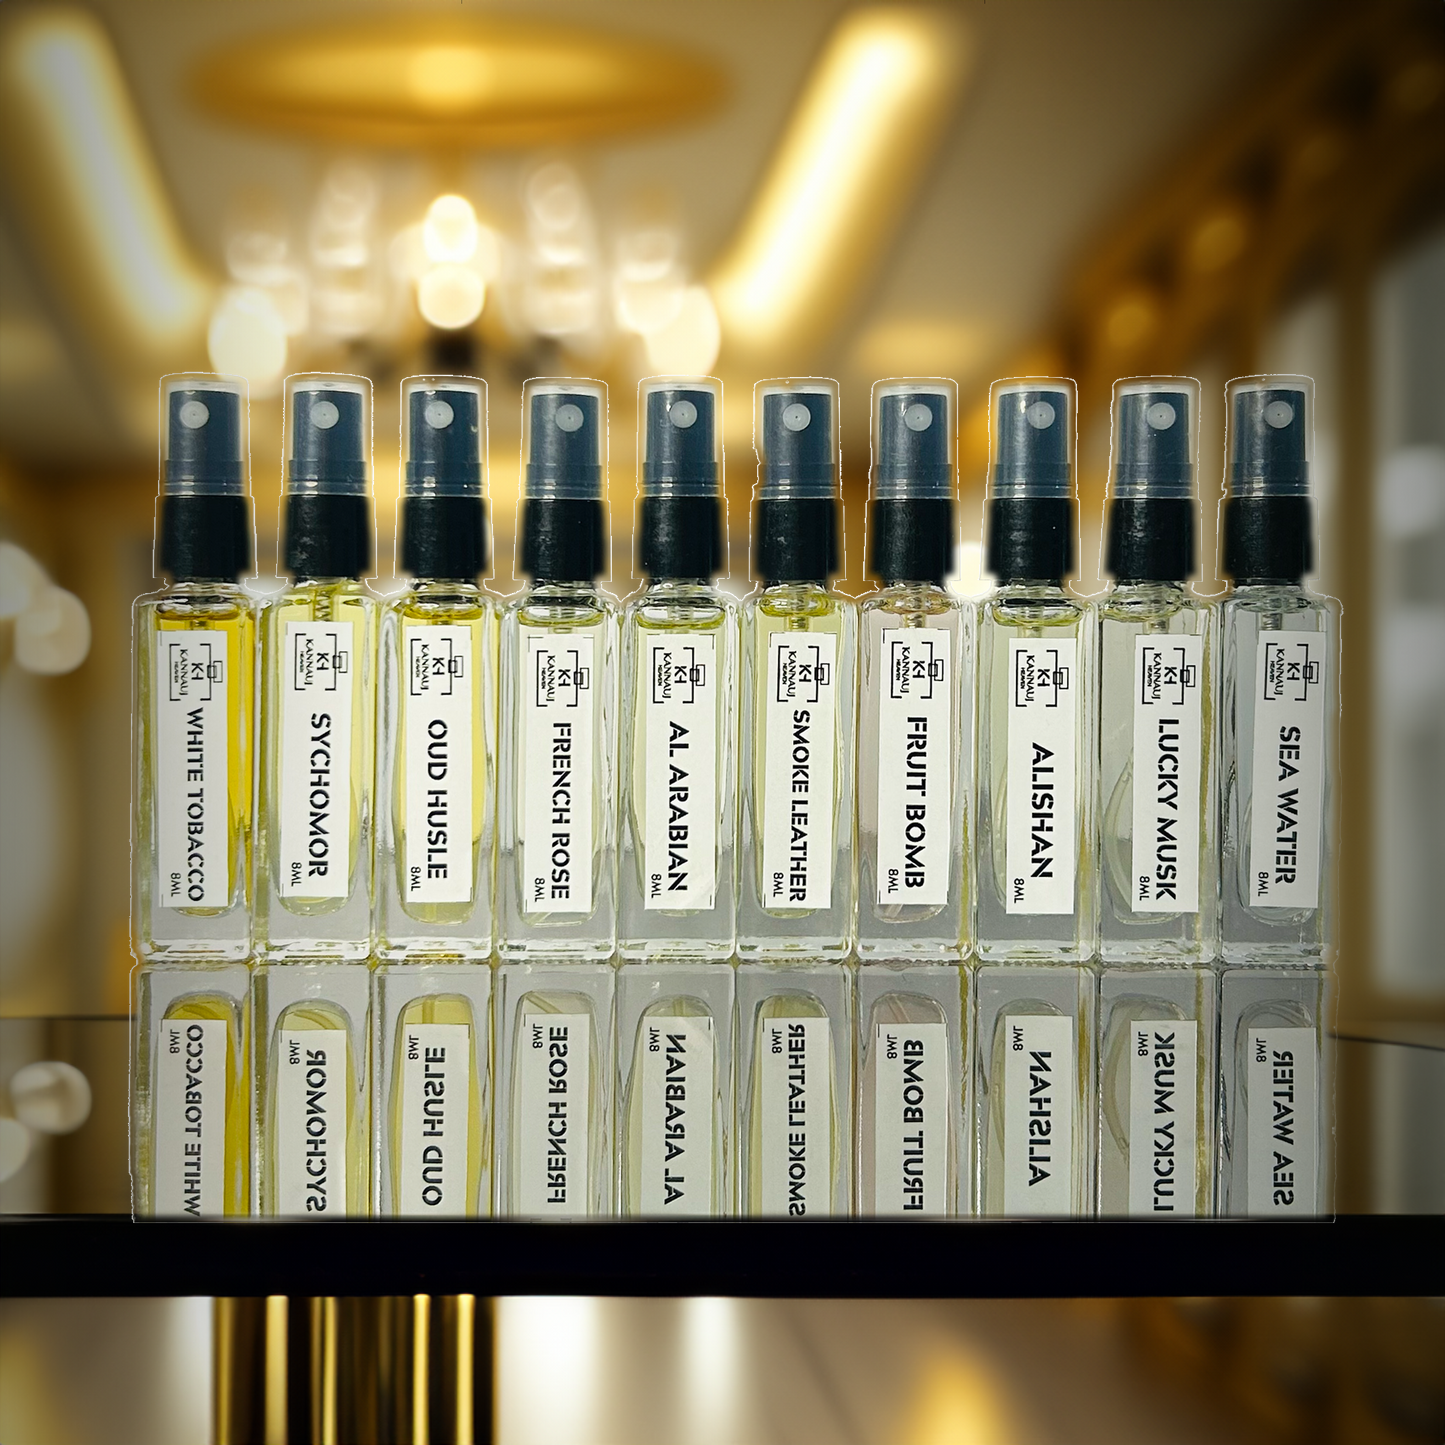 Premium Perfume Sample Set of 10